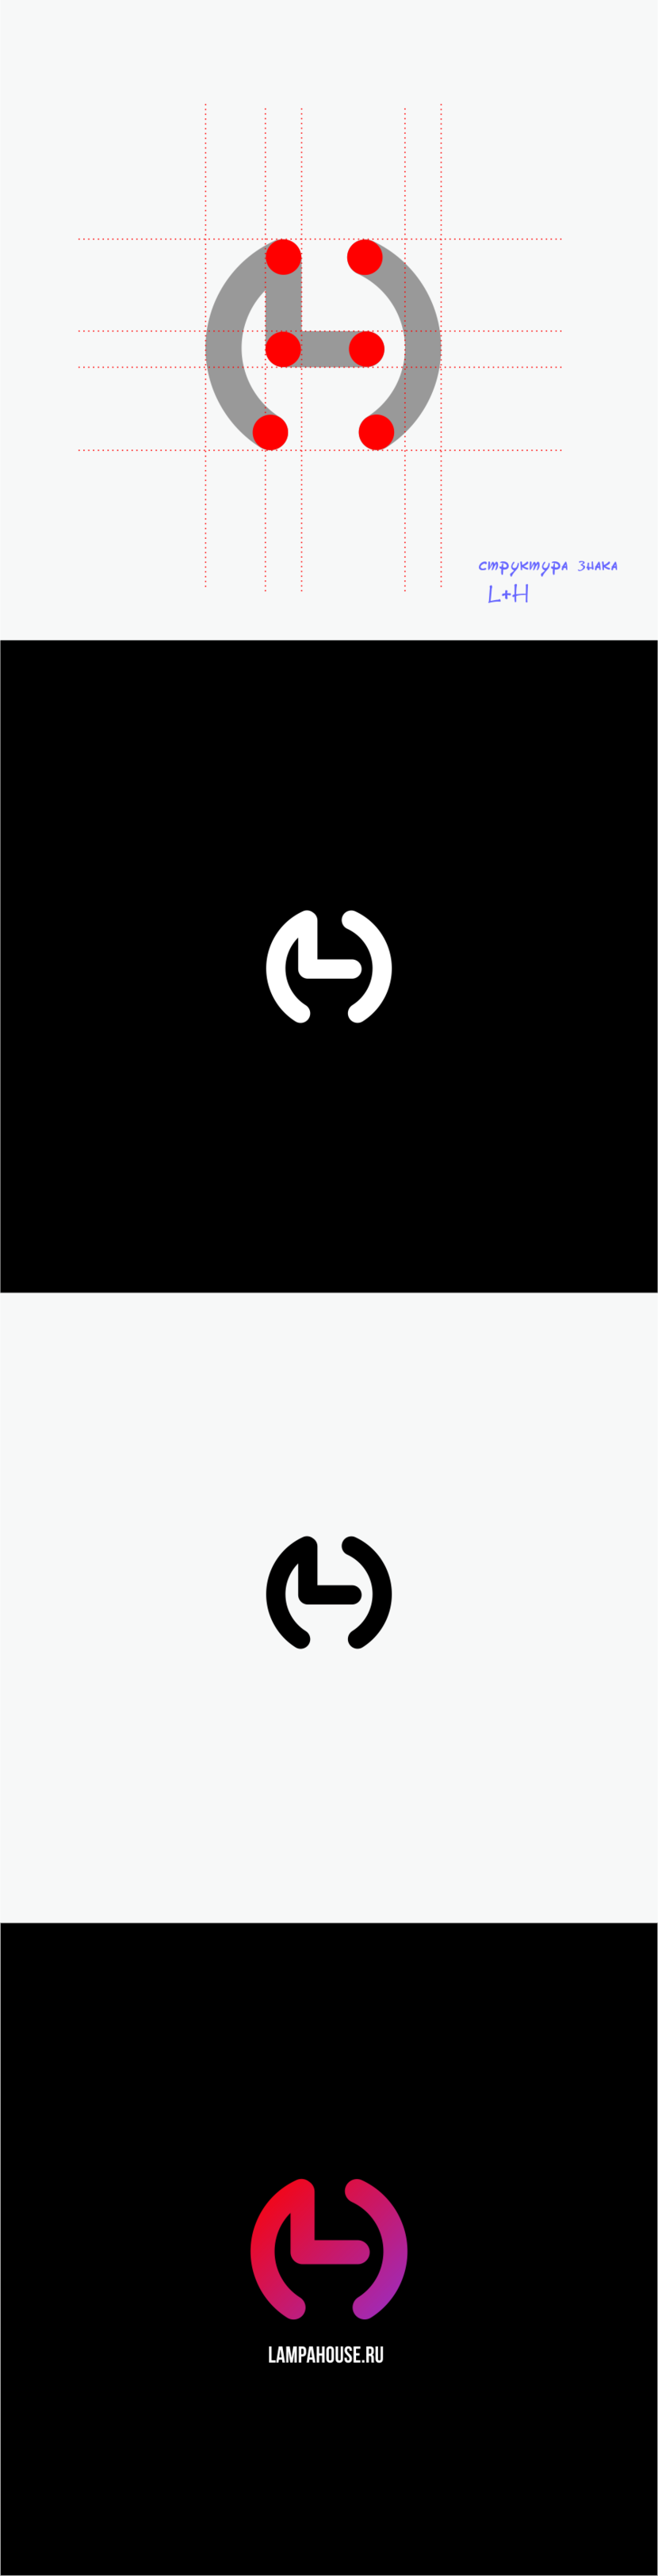 + - Логотип для интернет-магазина LAMPAHOUSE.RU